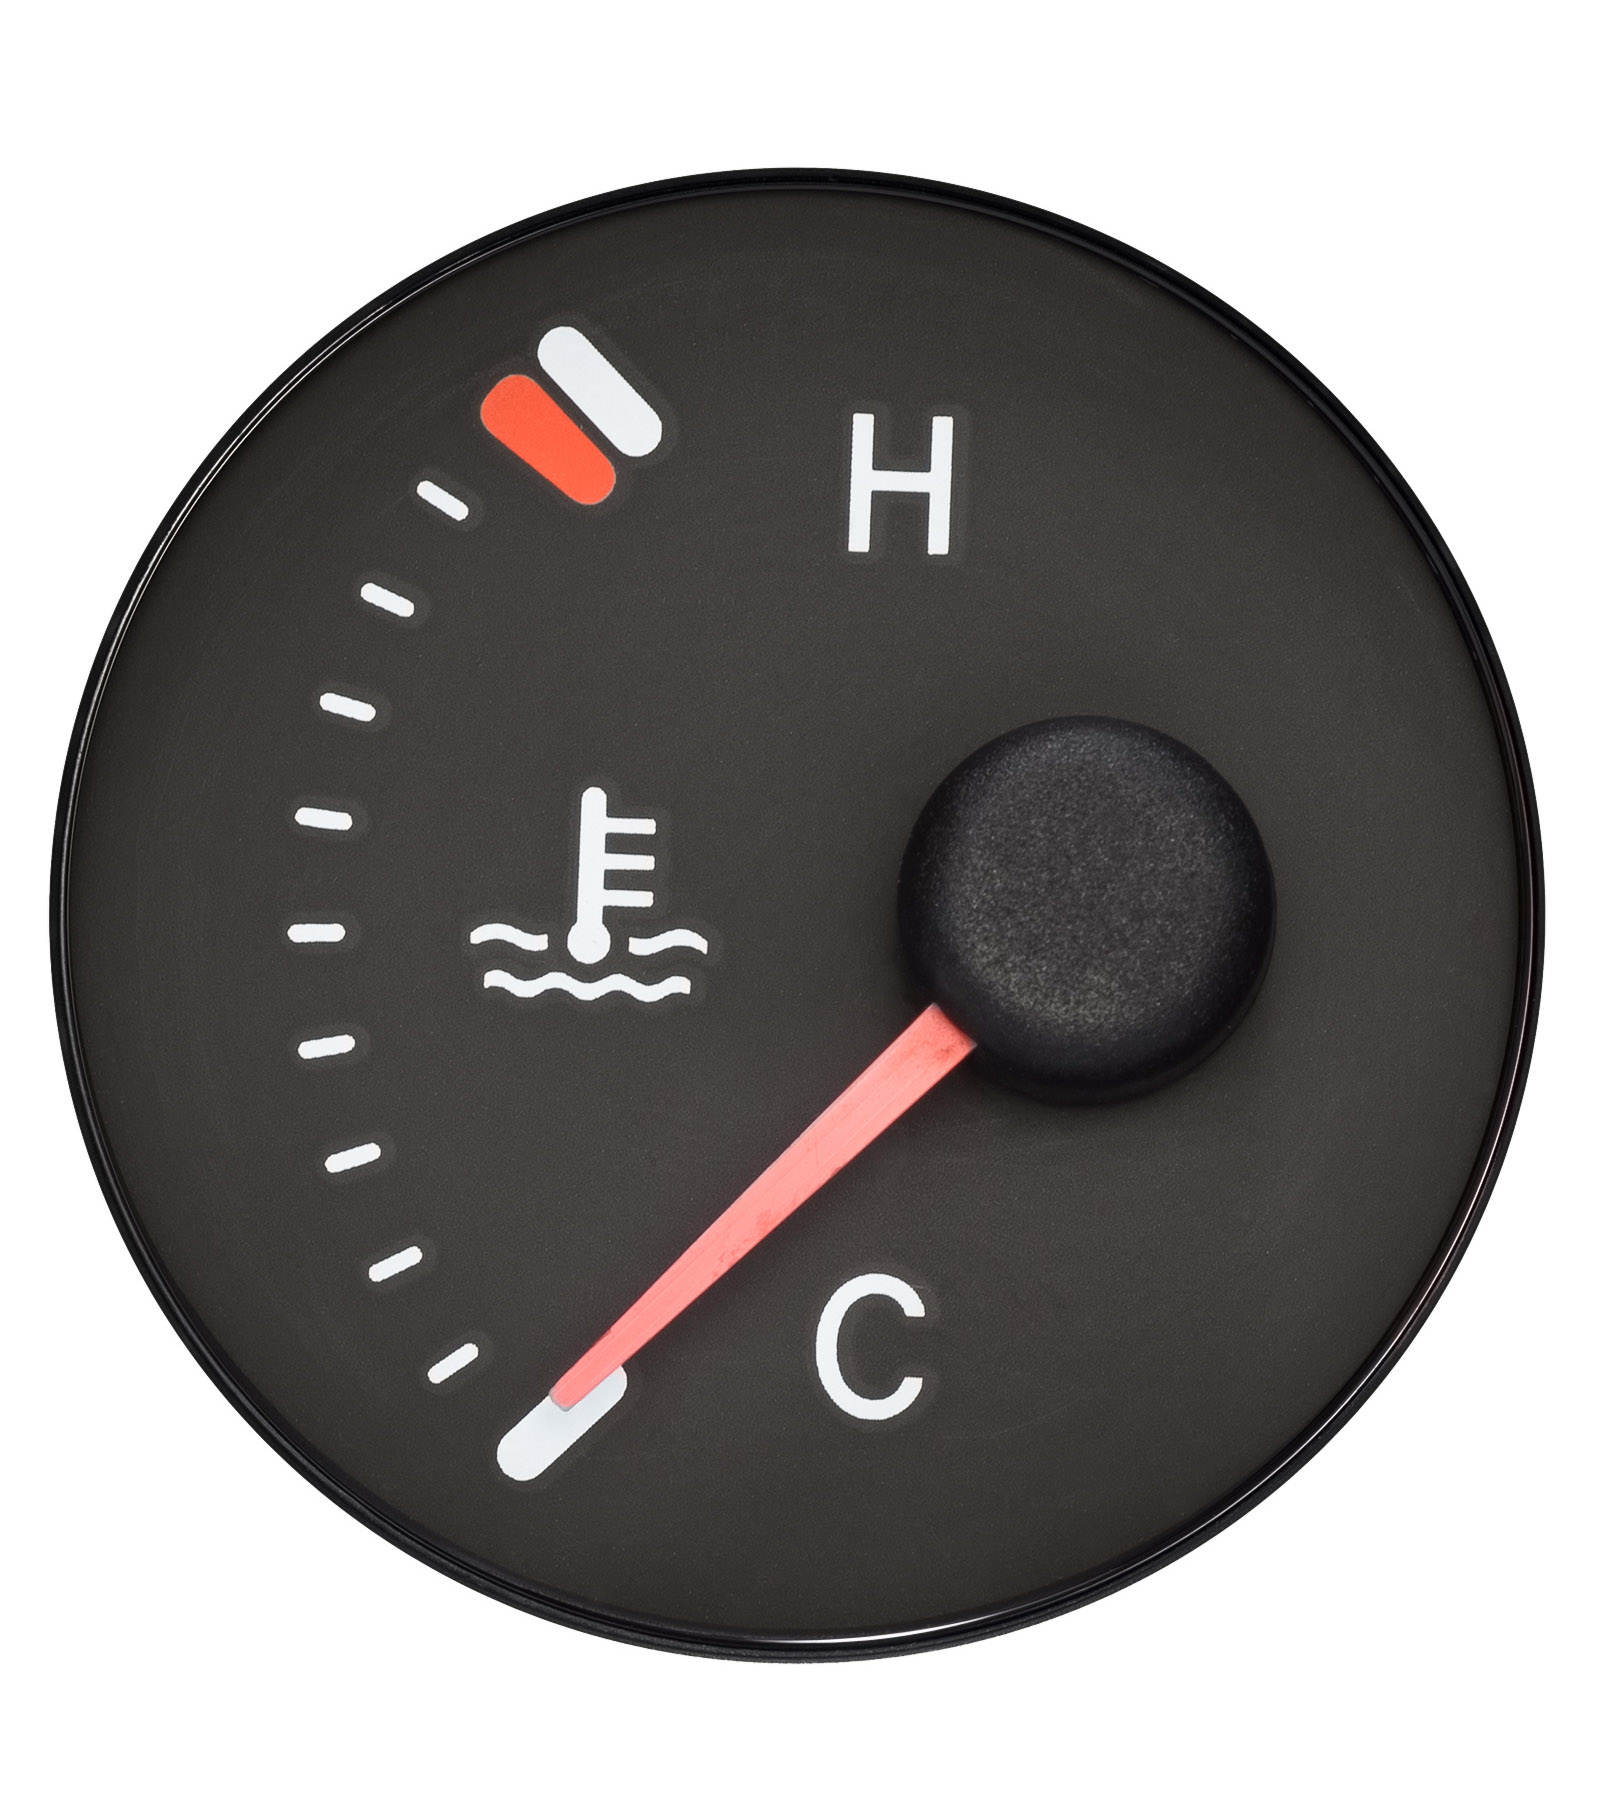 set of car gauge ( radiator temperature meter, speedometer, Tach